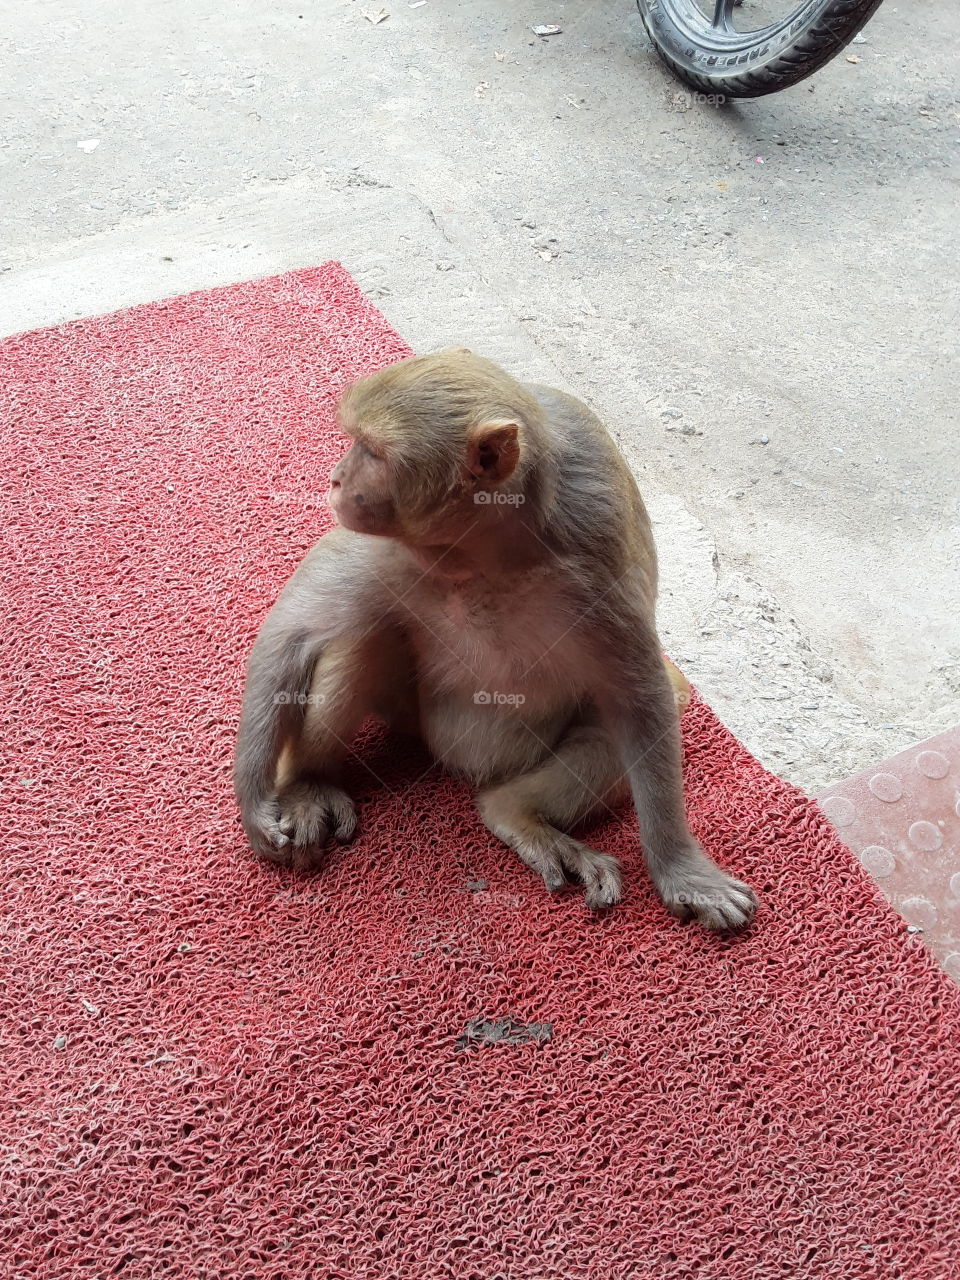 Monkey on the mat